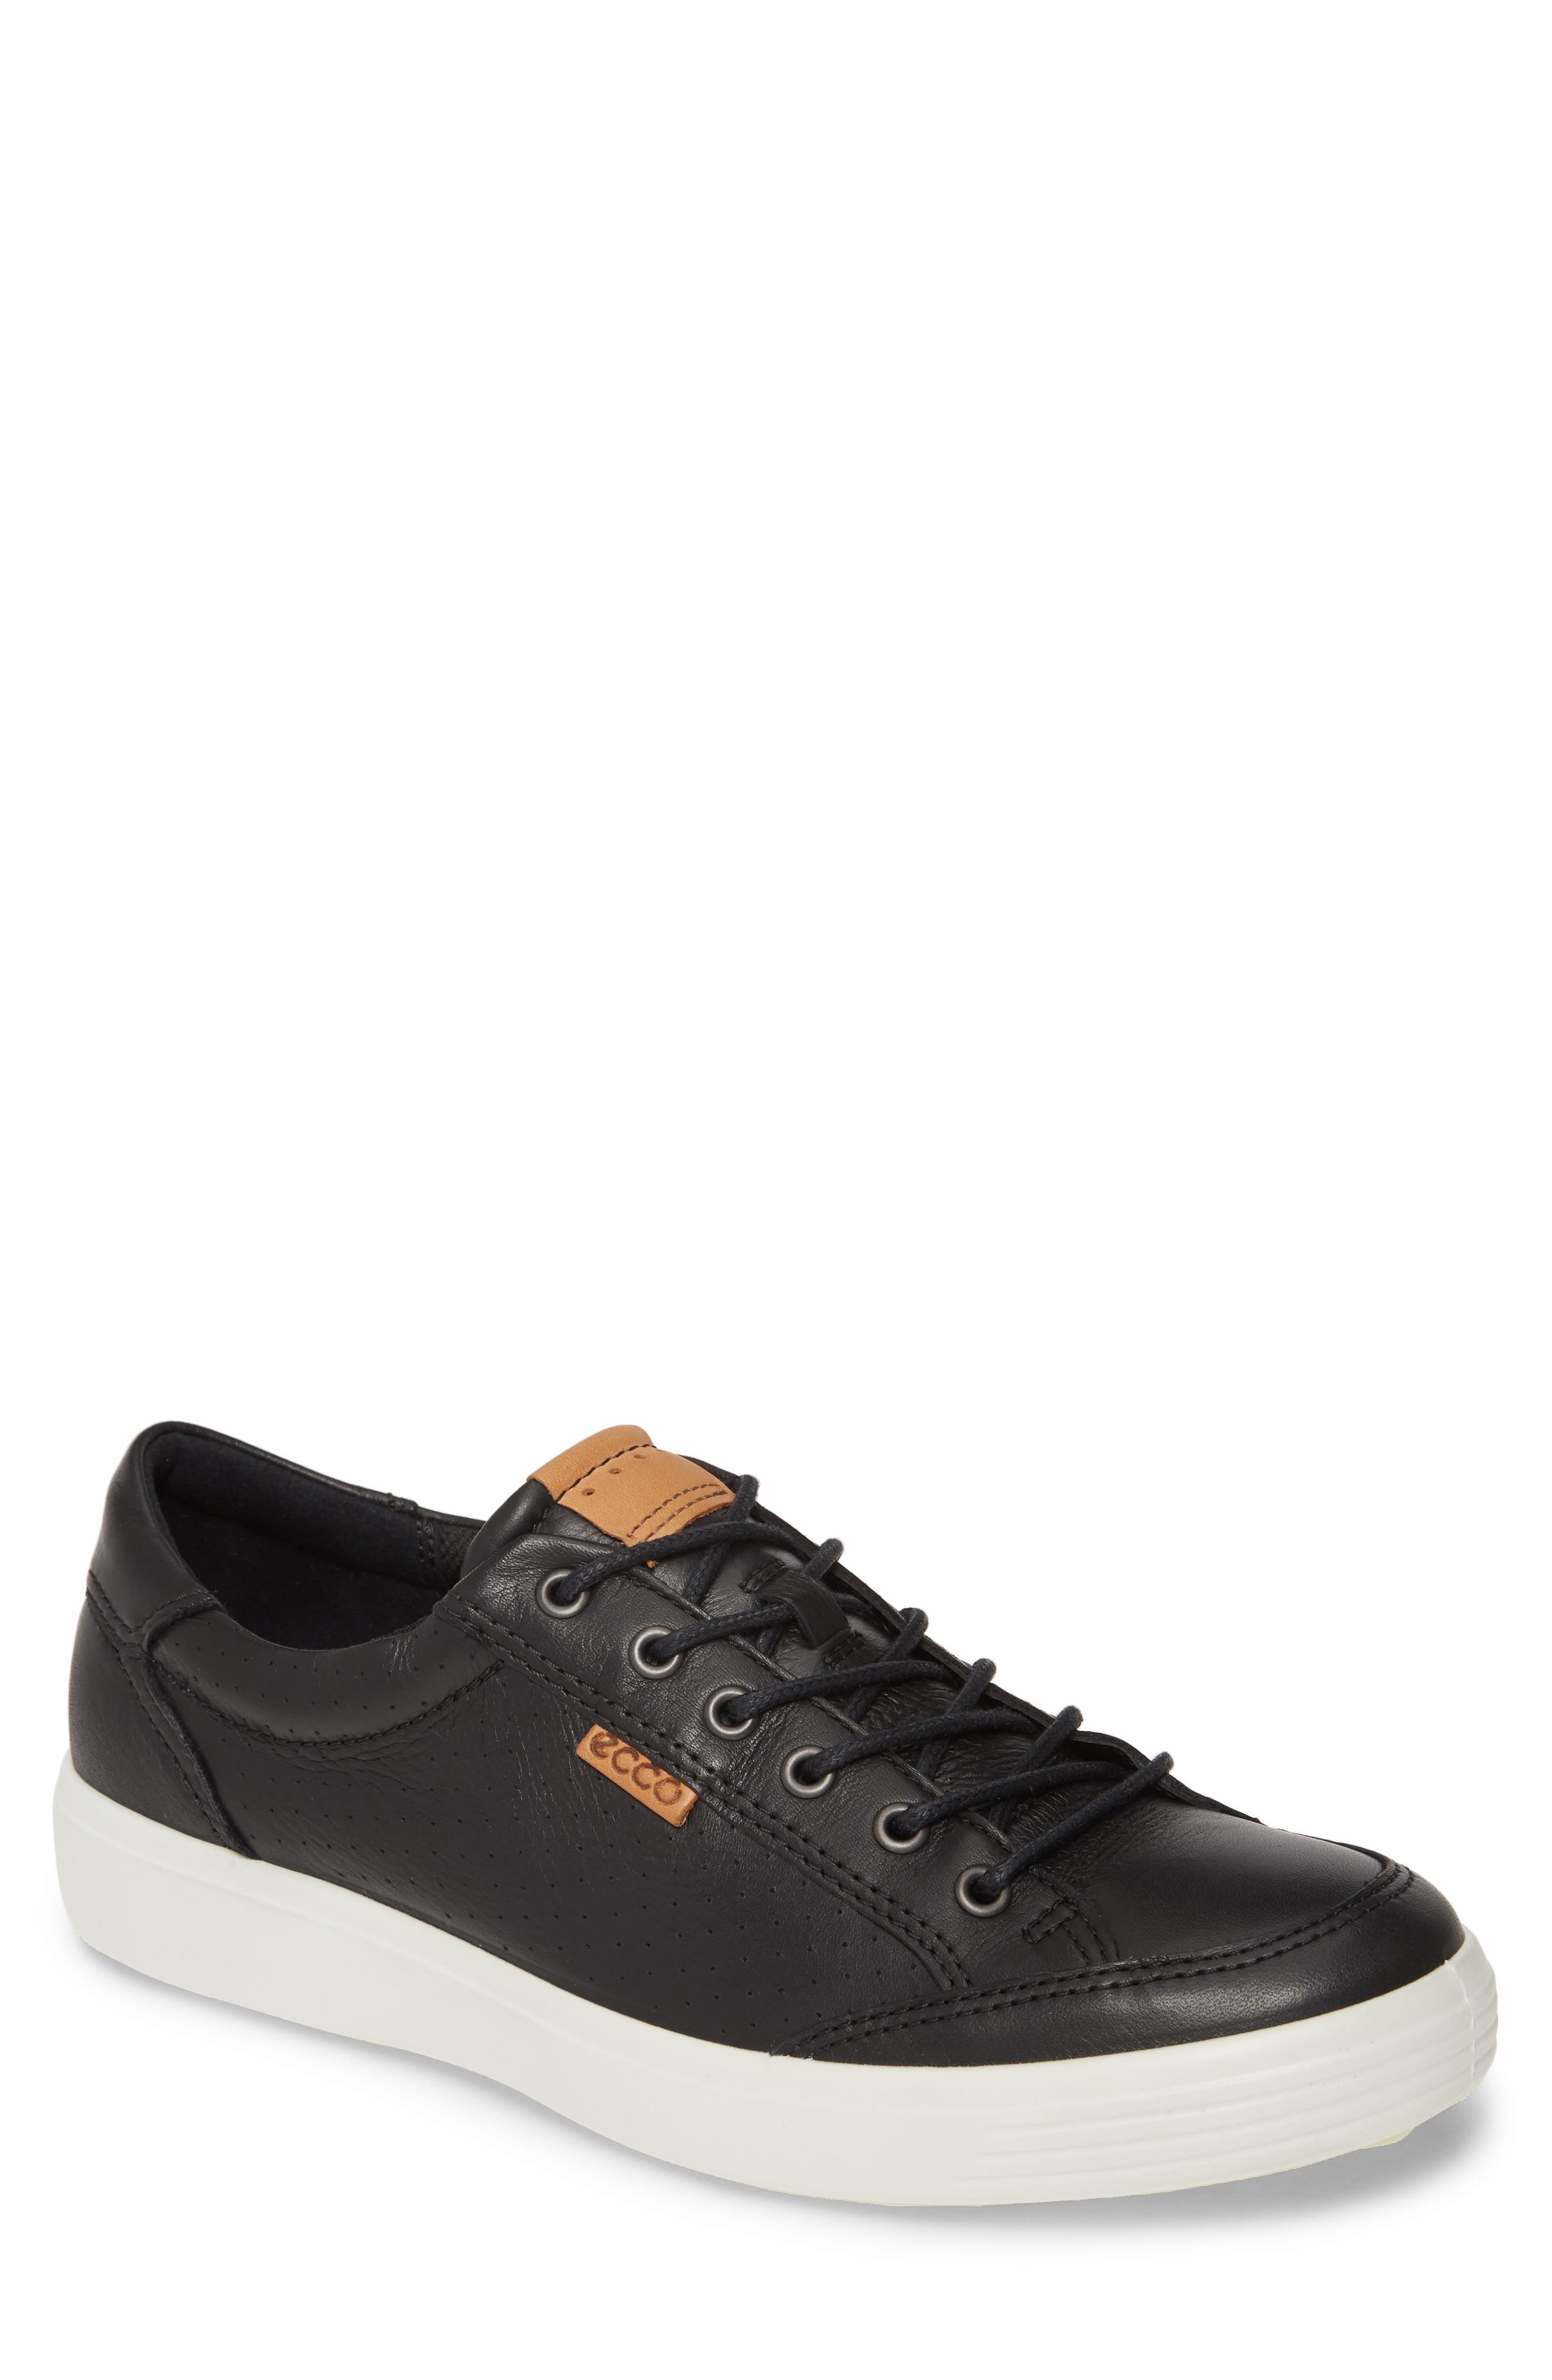 UPC 825840084610 product image for Men's Ecco Soft 7 Light Sneaker, Size 10-10.5US - Black | upcitemdb.com